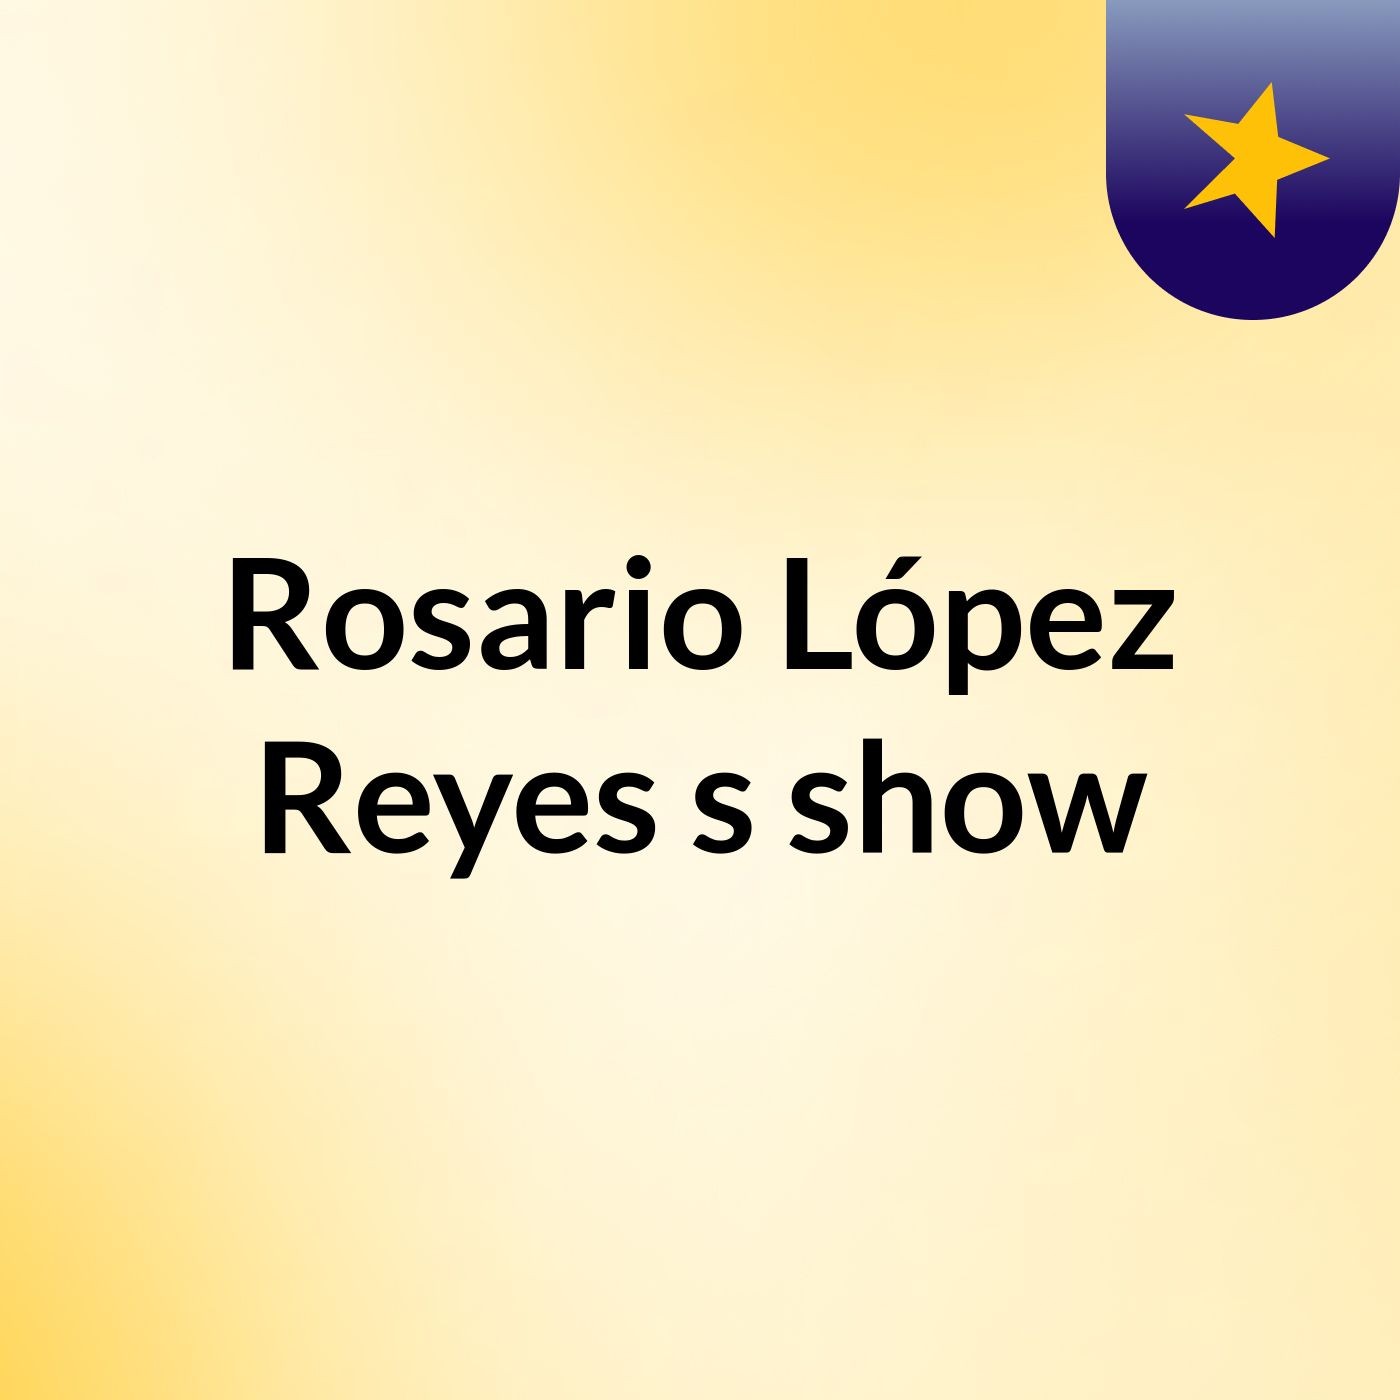 Episodio 5 - Rosario López Reyes's show